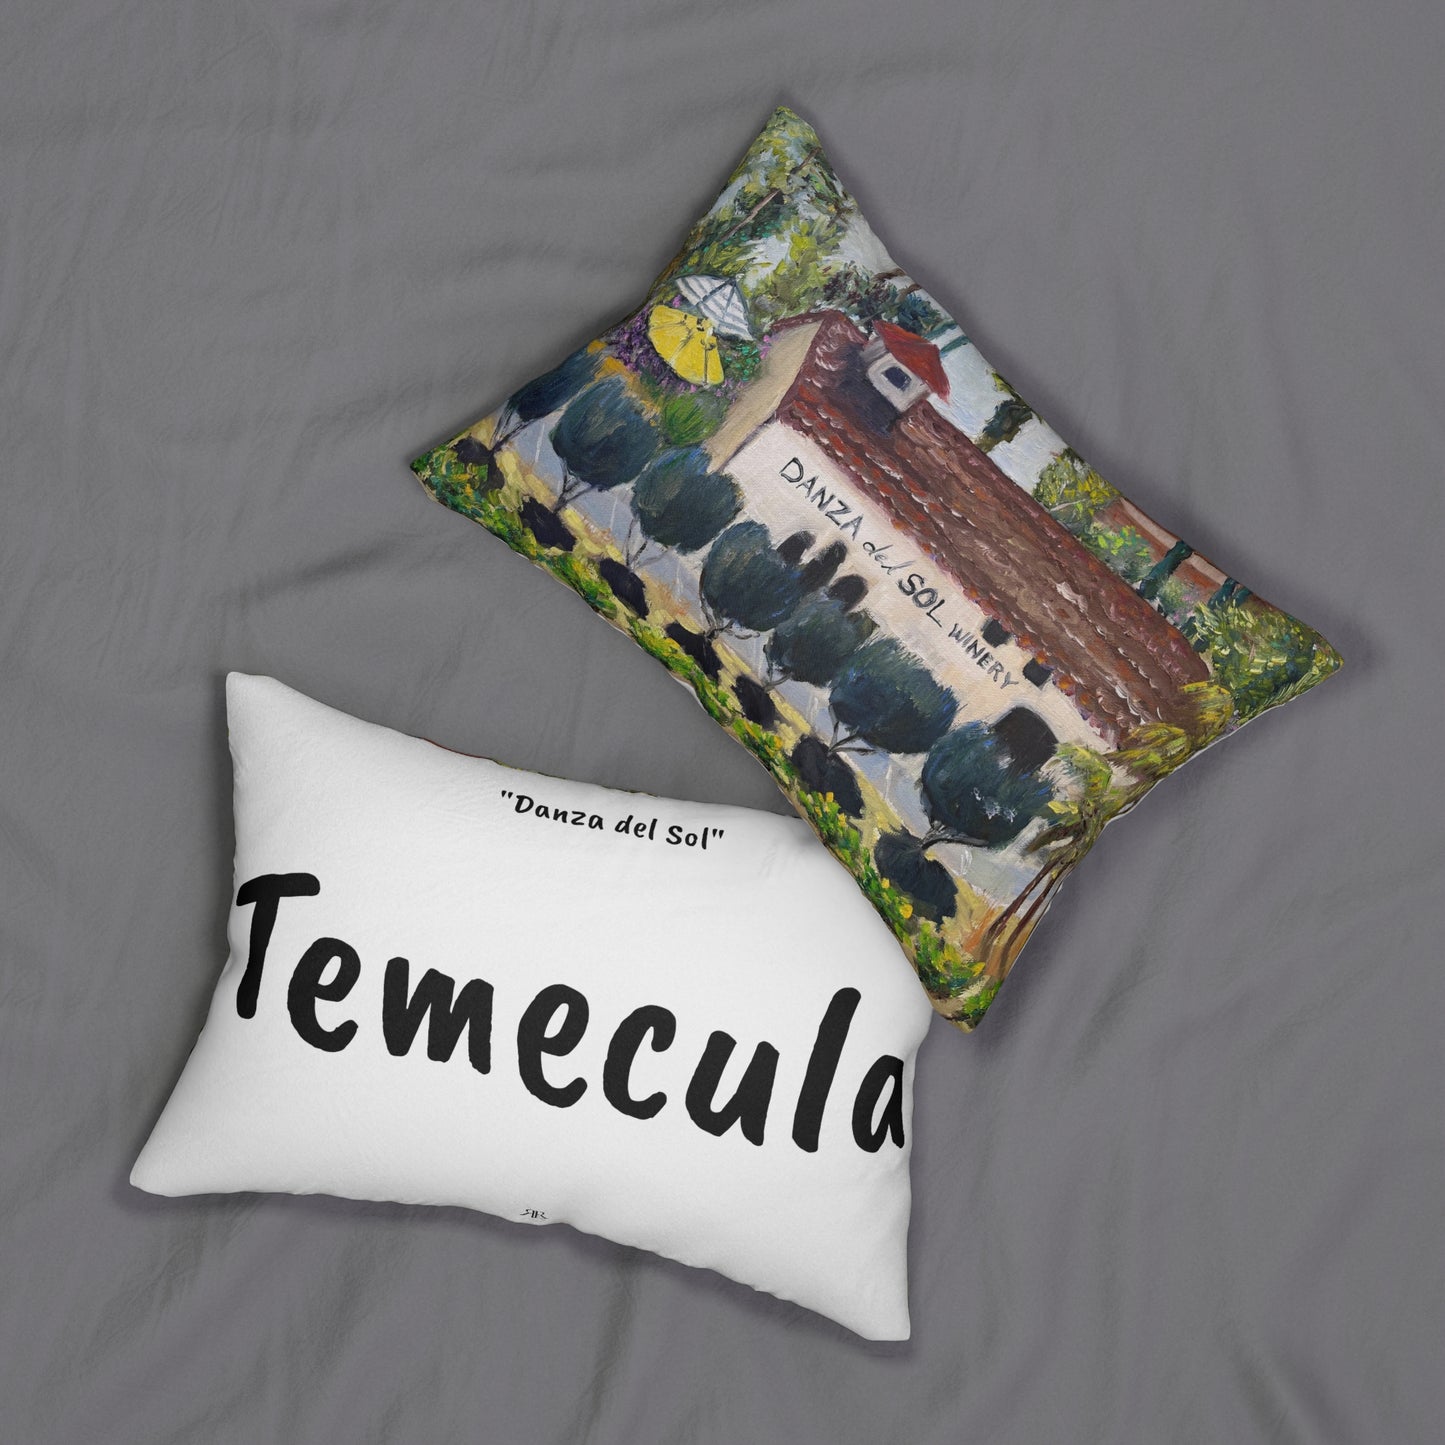 Temecula Lumbar Pillow featuring "Danza del Sol" painting and "Temecula"